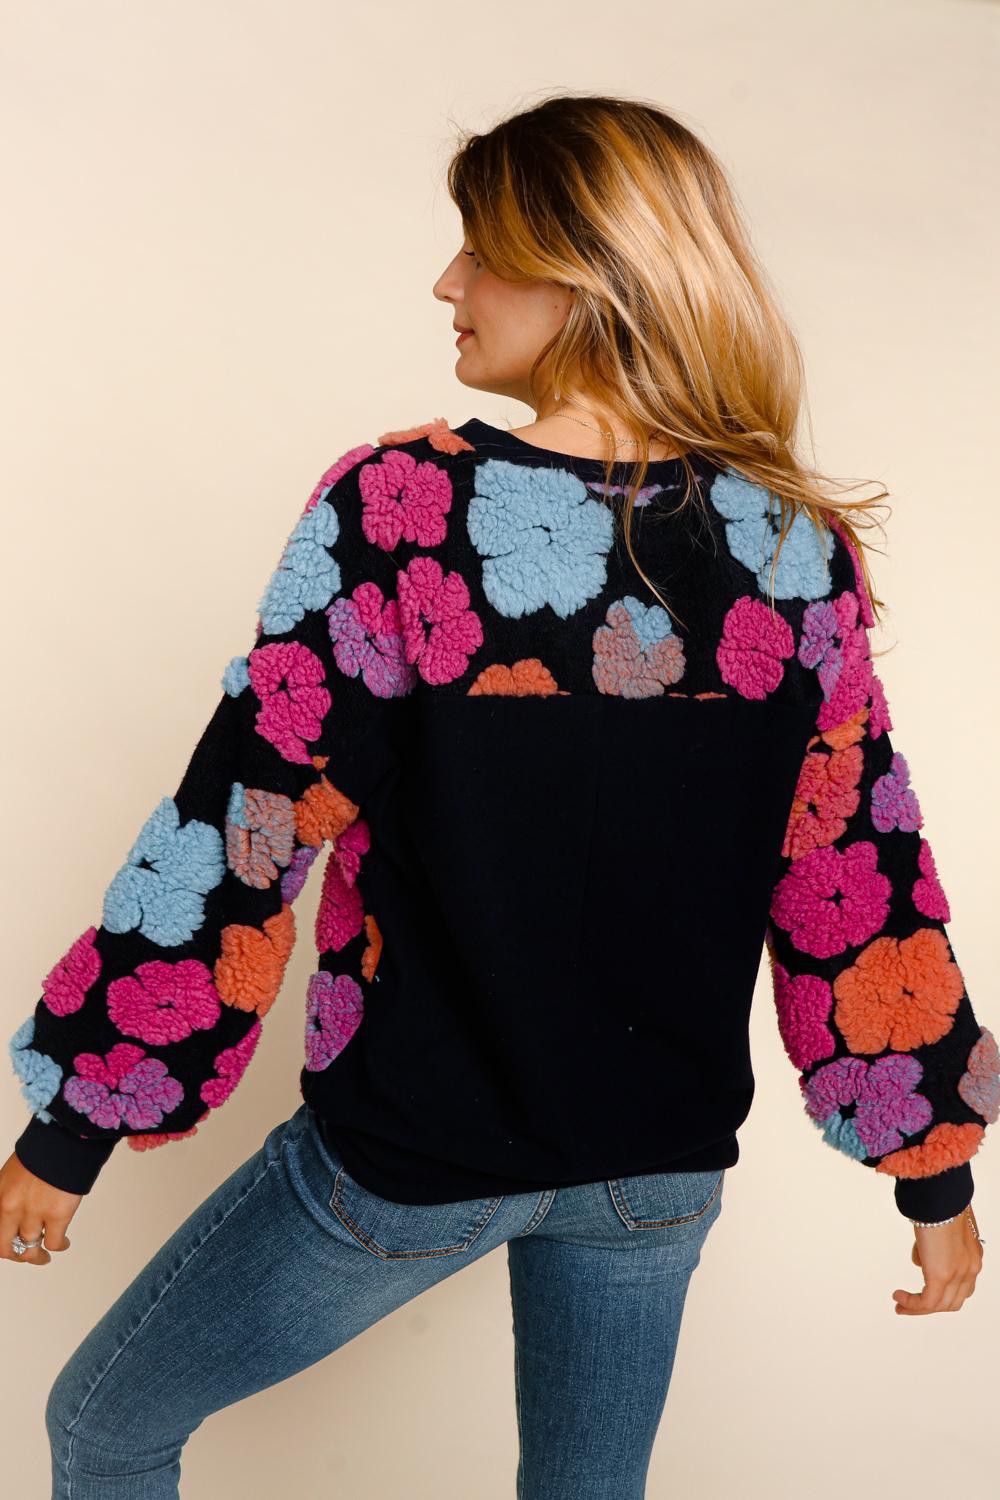 Puffy Flower Sweater - Fuchsia & Blue